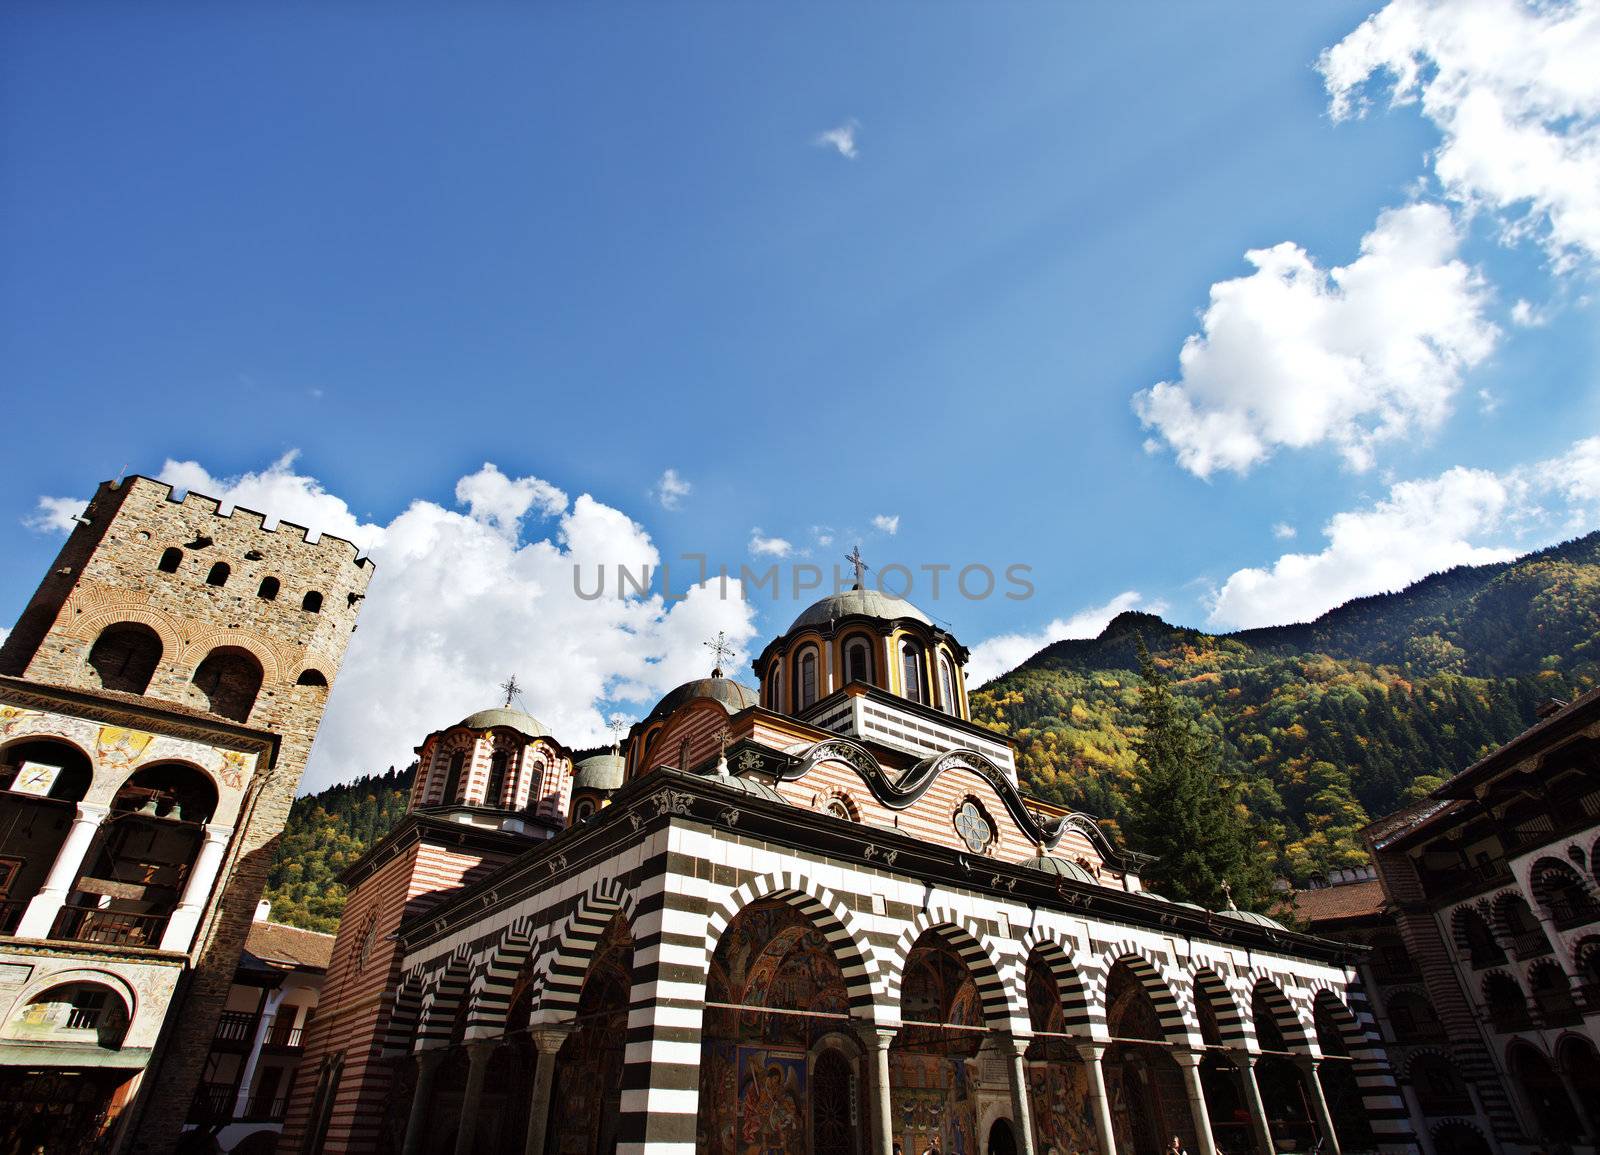 Hreliov�s tower and church Nativity of the Virgin in Rila Monastery, Bulgaria